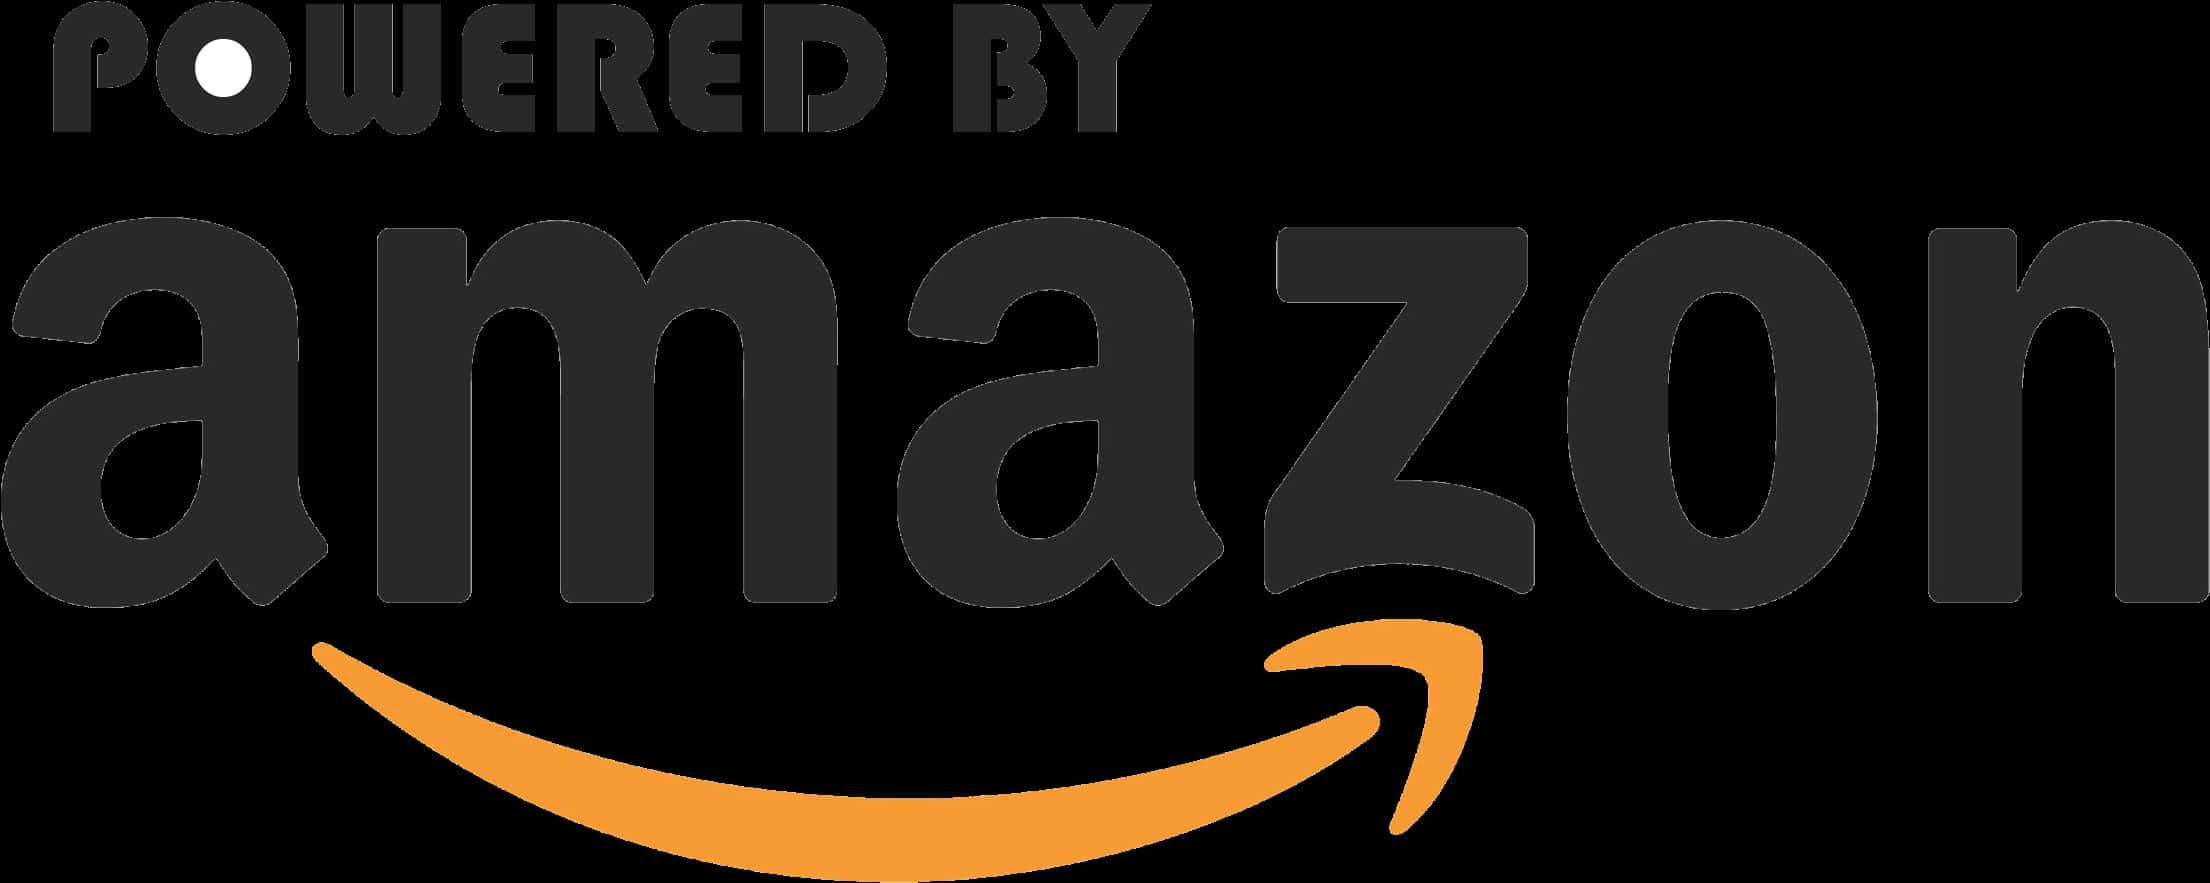 Poweredby Amazon Logo PNG